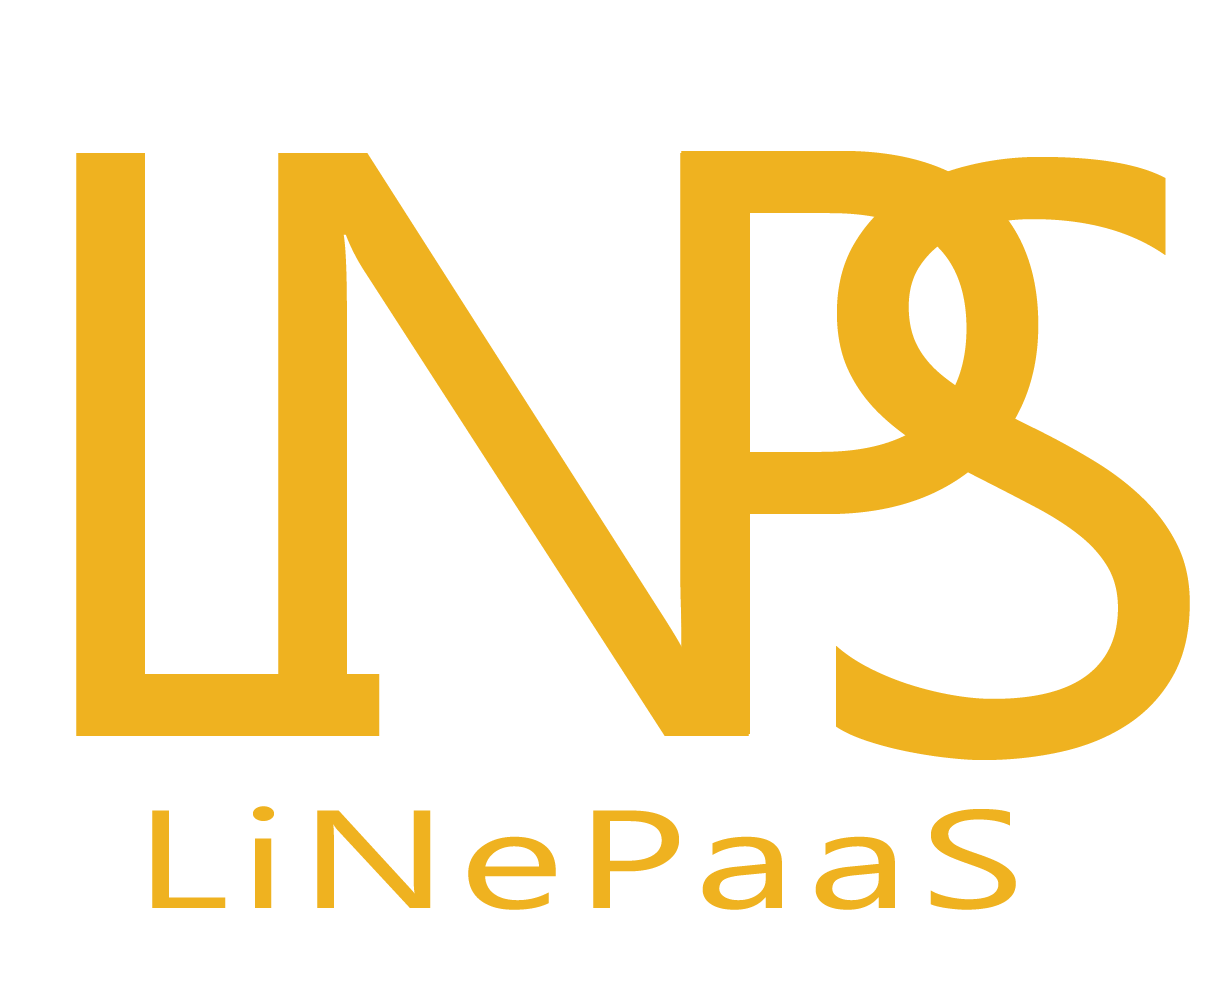 linepaas logo